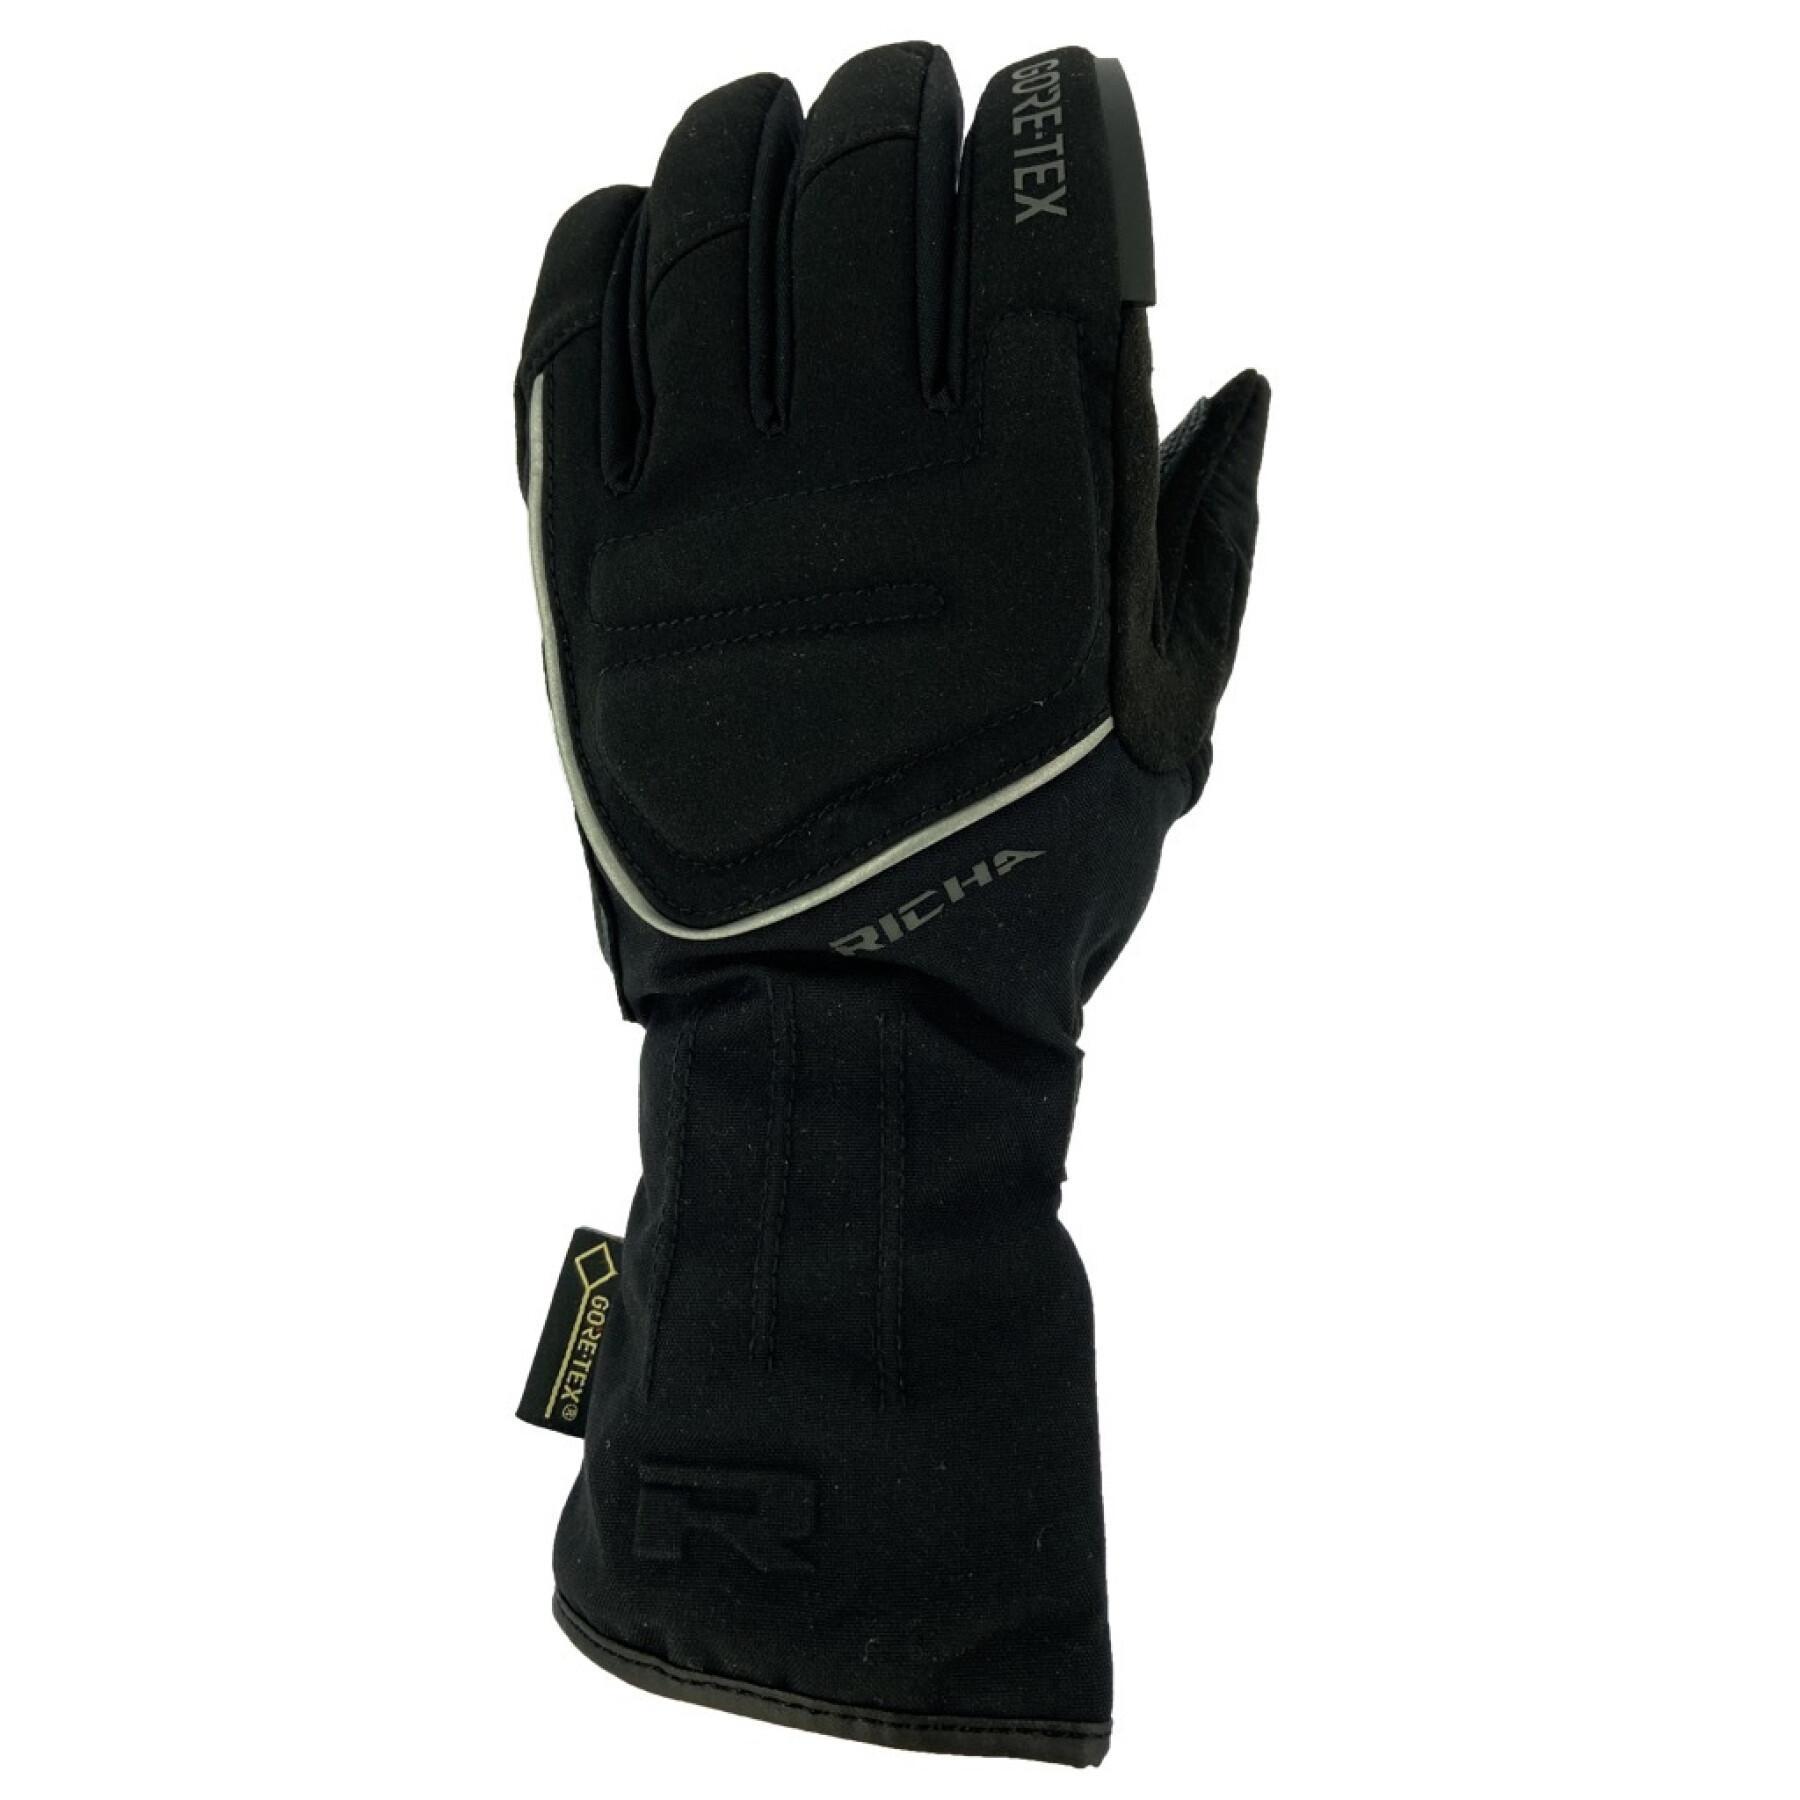 Richa Invader Gore-Tex women's winter motorcycle gloves